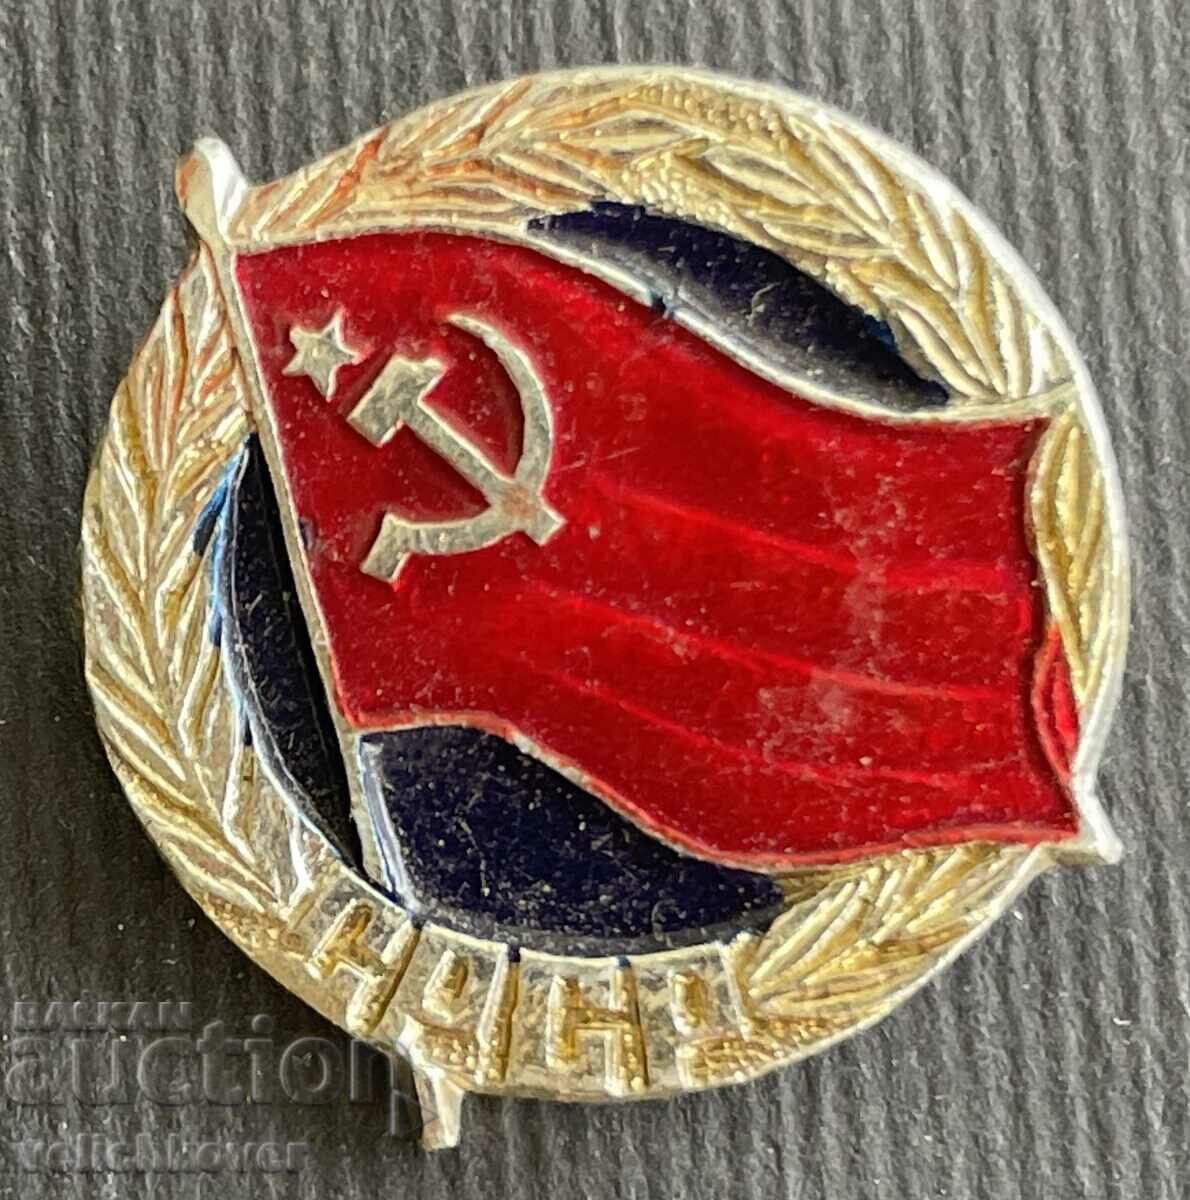 36262 USSR sign propaganda sign Red flag